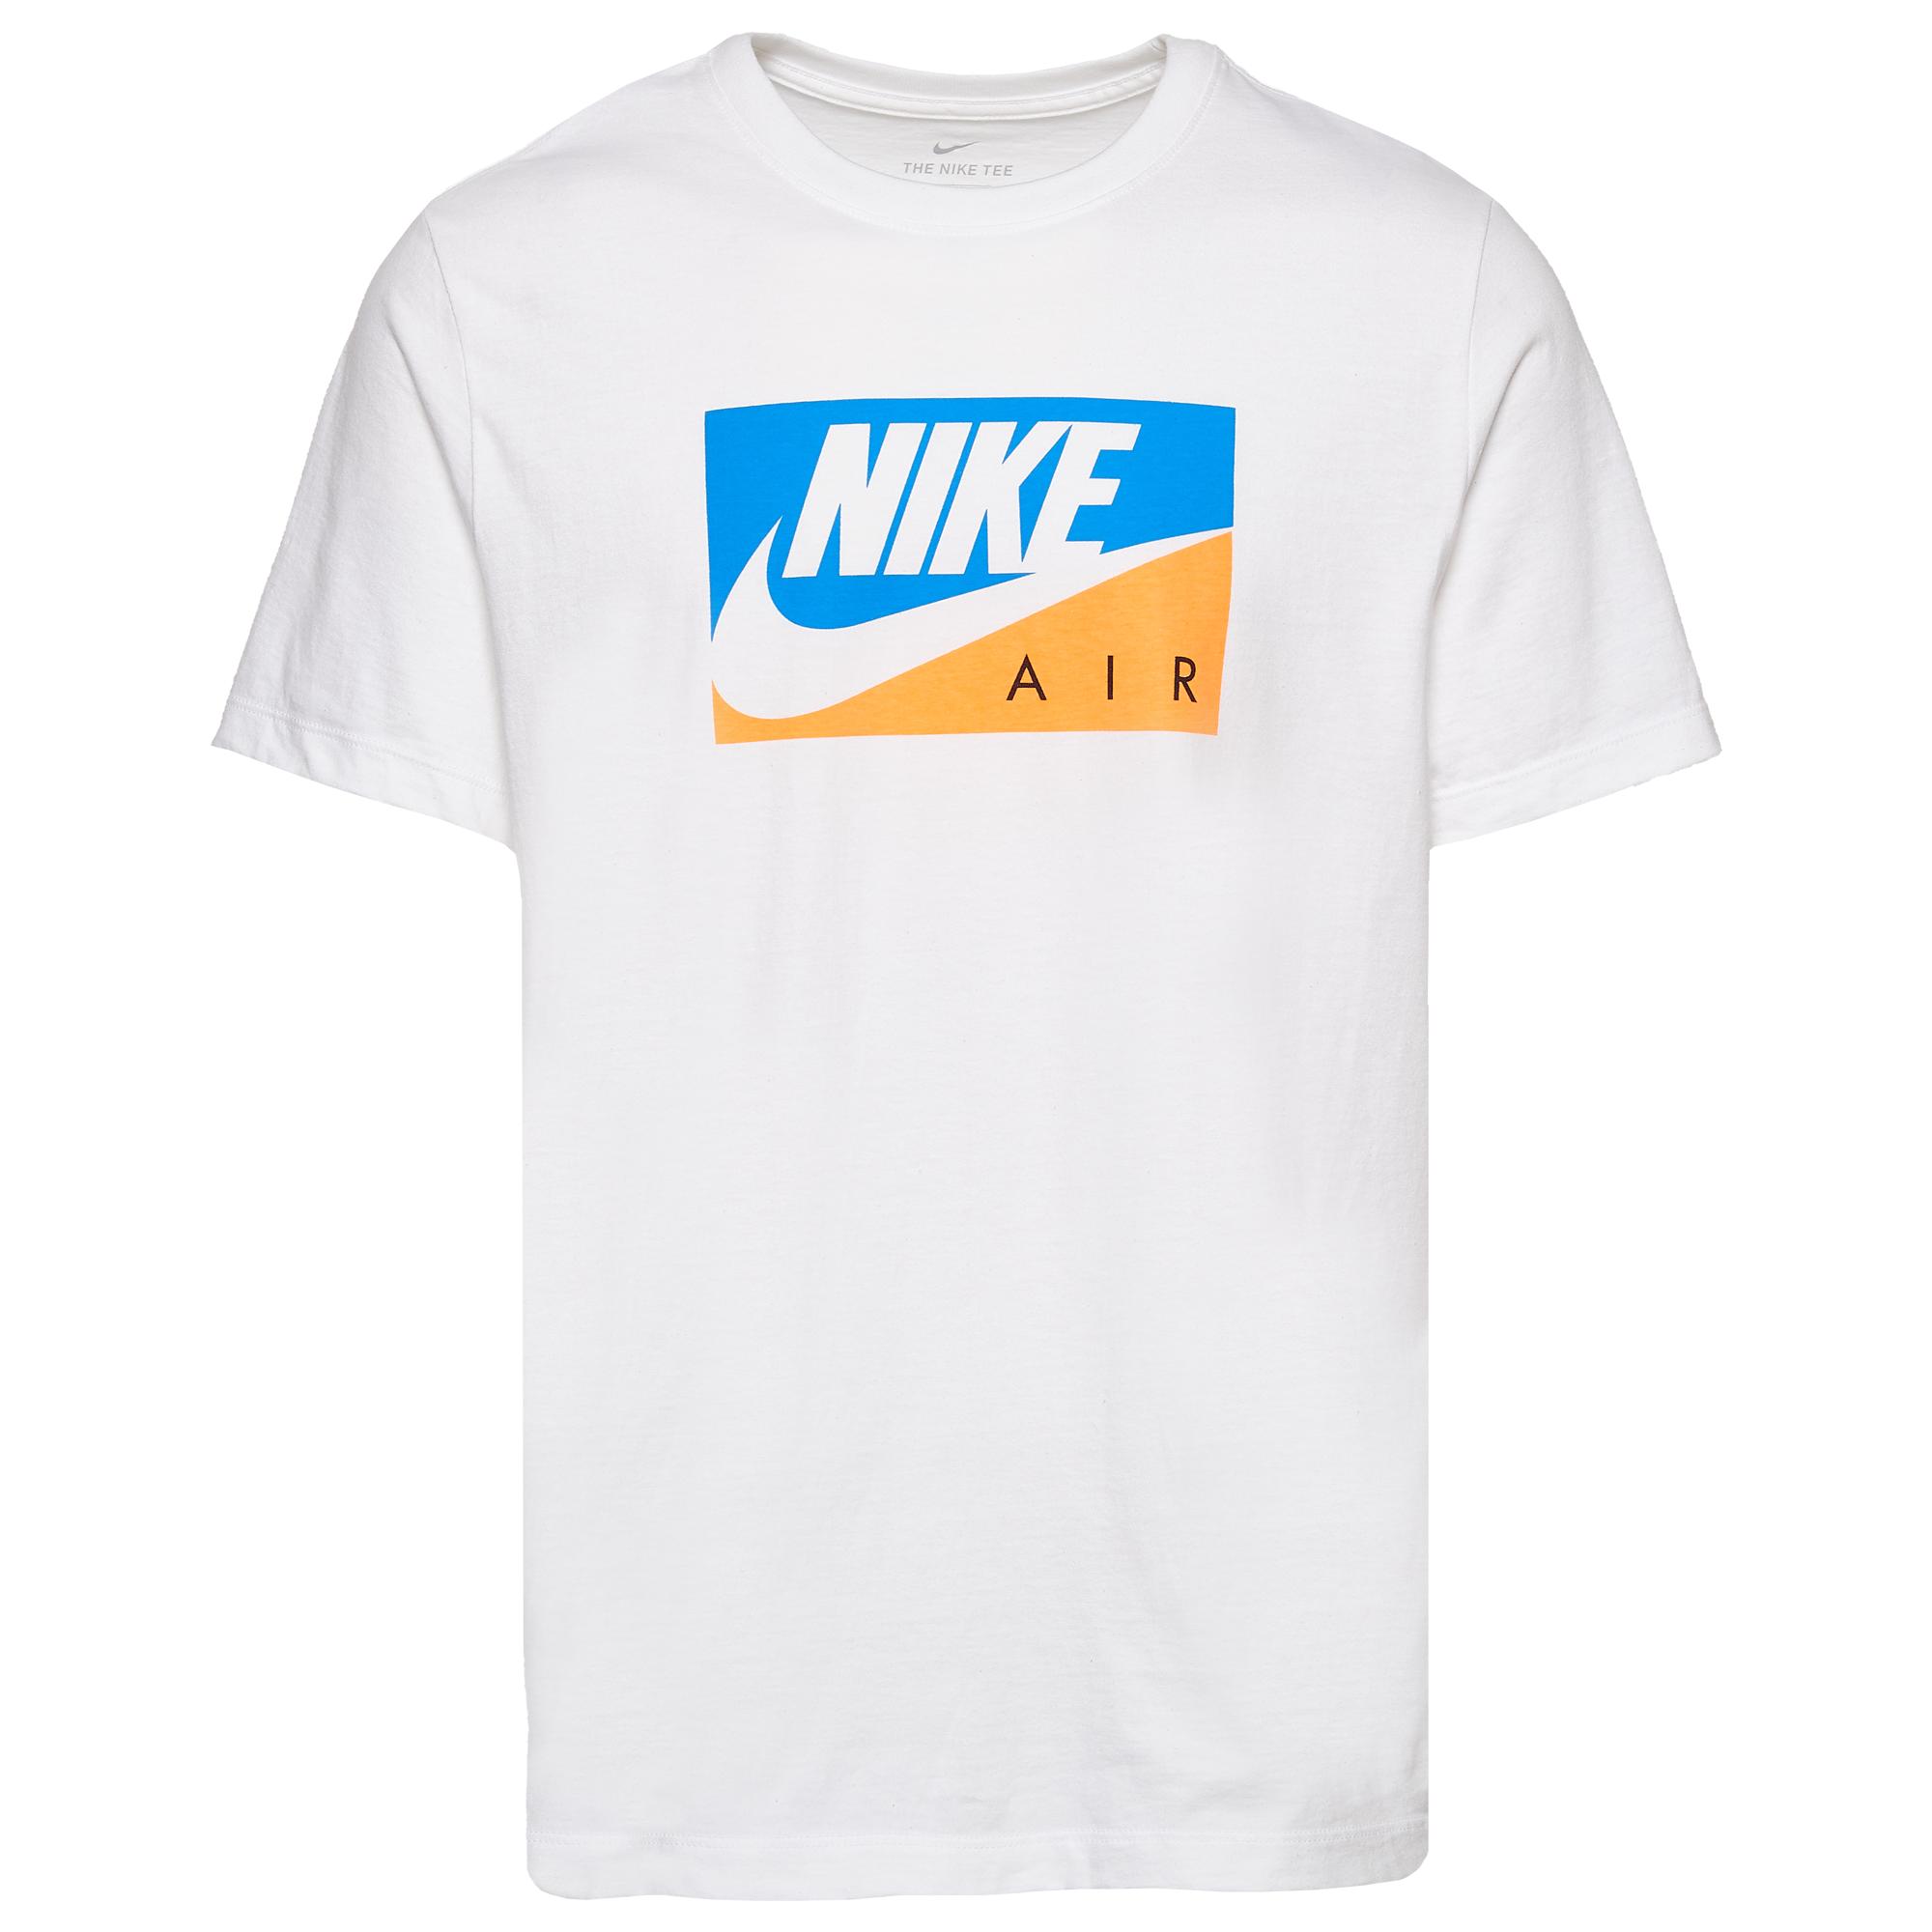 white nike shirt with blue logo